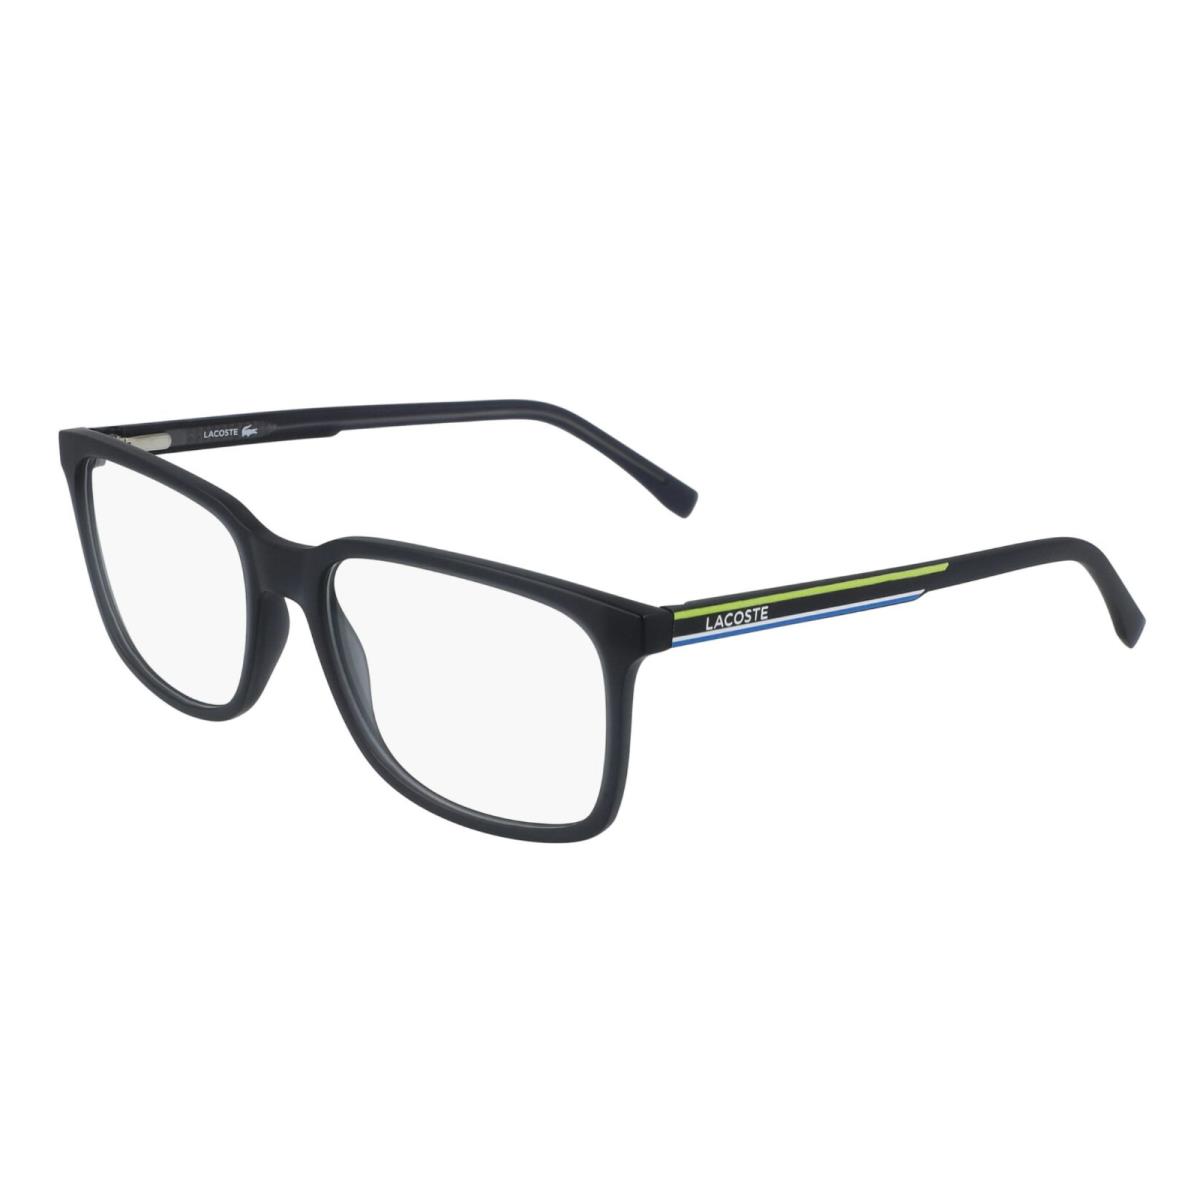 Lacoste Eyeglasses L2859 024 57-18 145 Large Grey w/ Yellow Blue White Frames - Frame: Dark Grey, Lens: